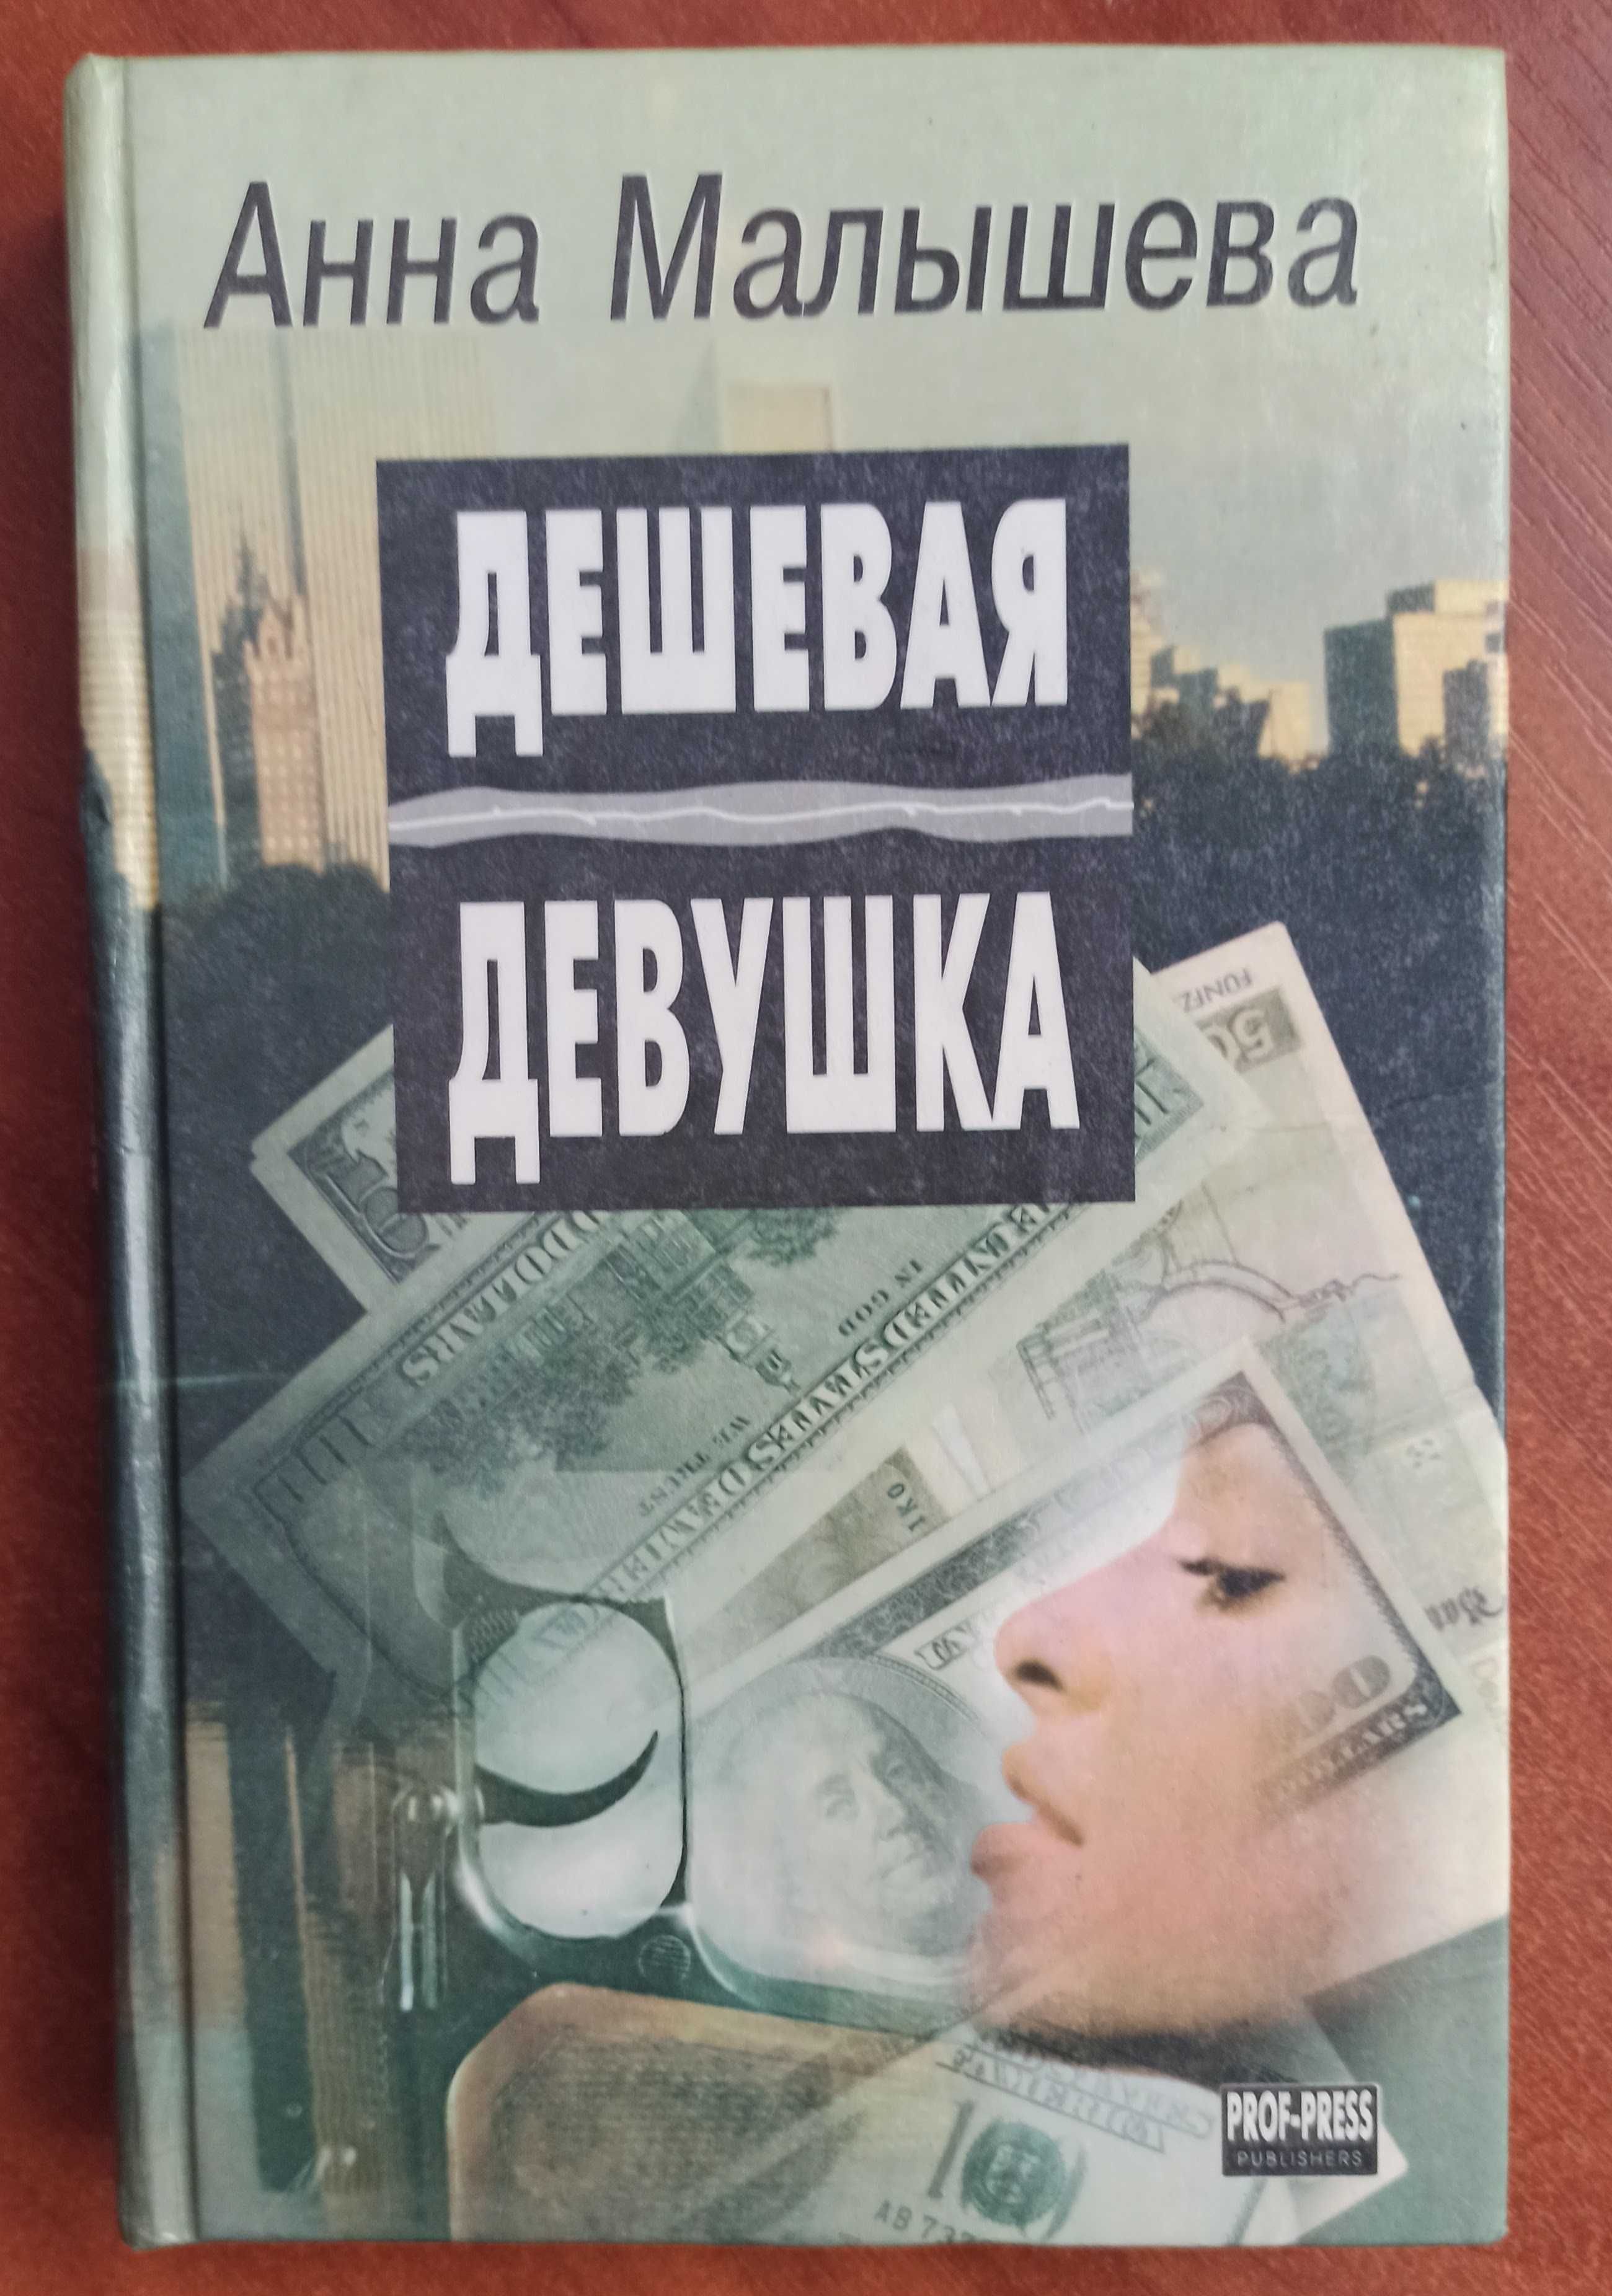 Книга Анна Малышева "Дешевая девушка"